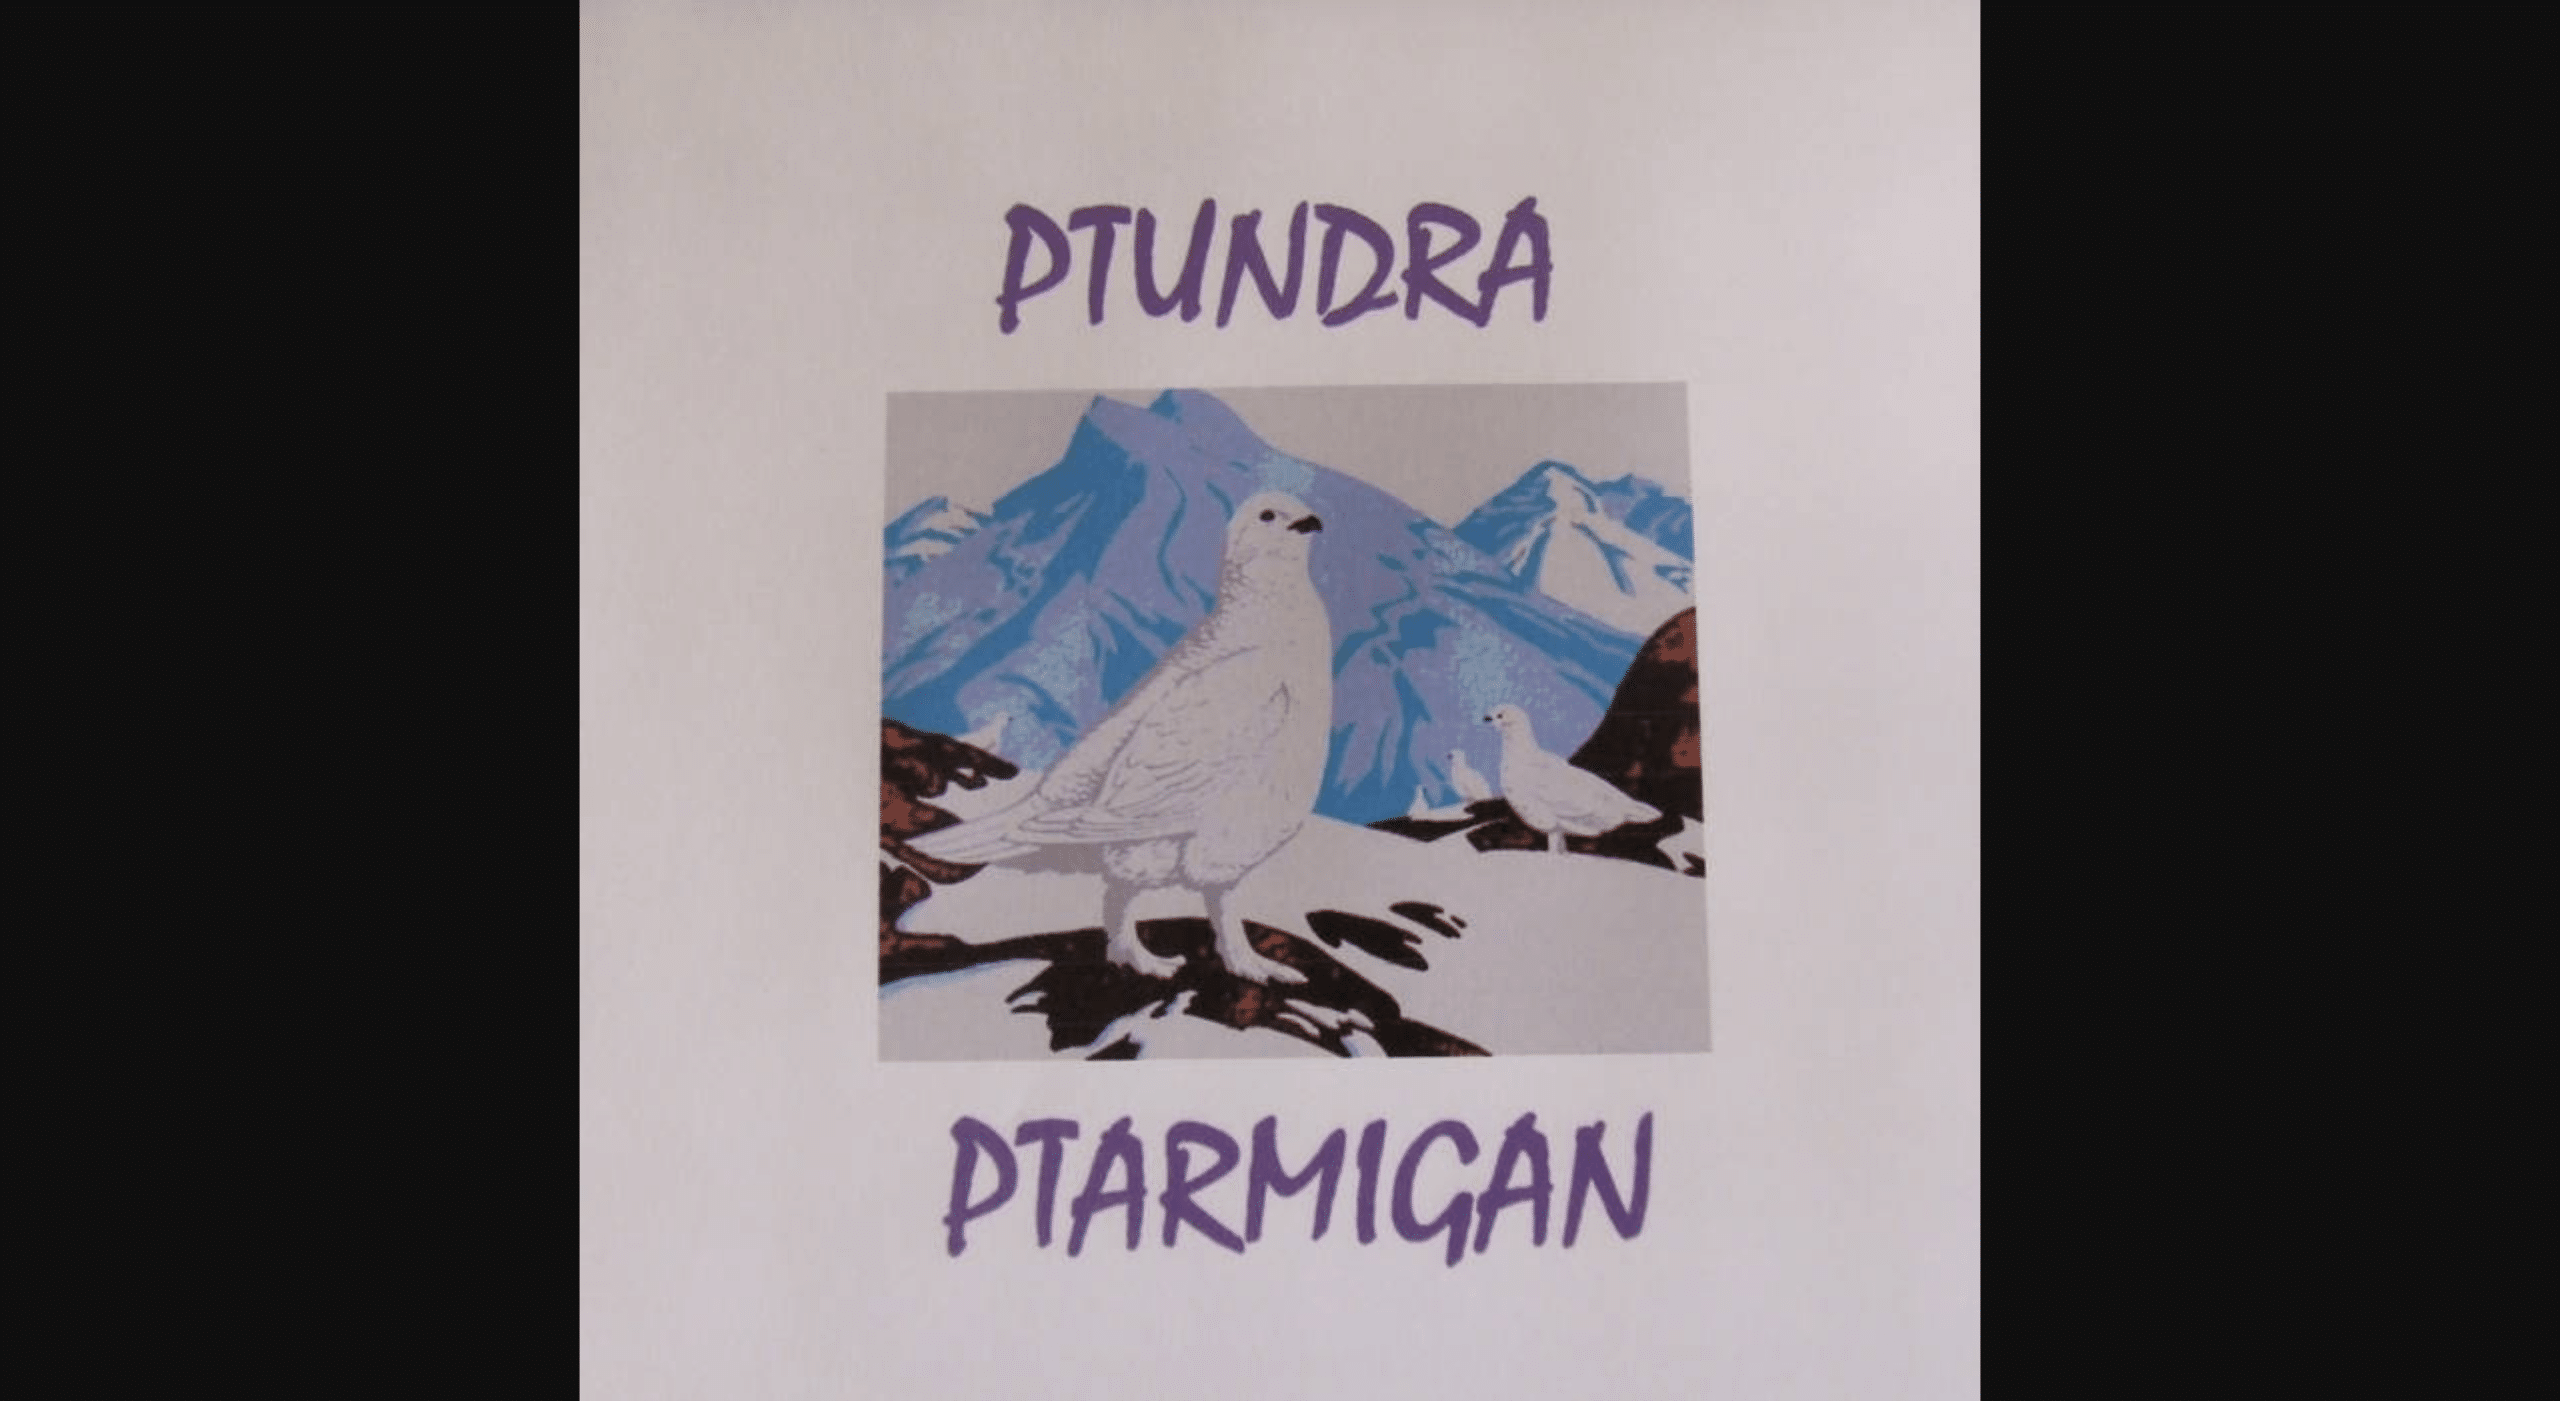 Ptarmigan – Ptundra [Full Album]